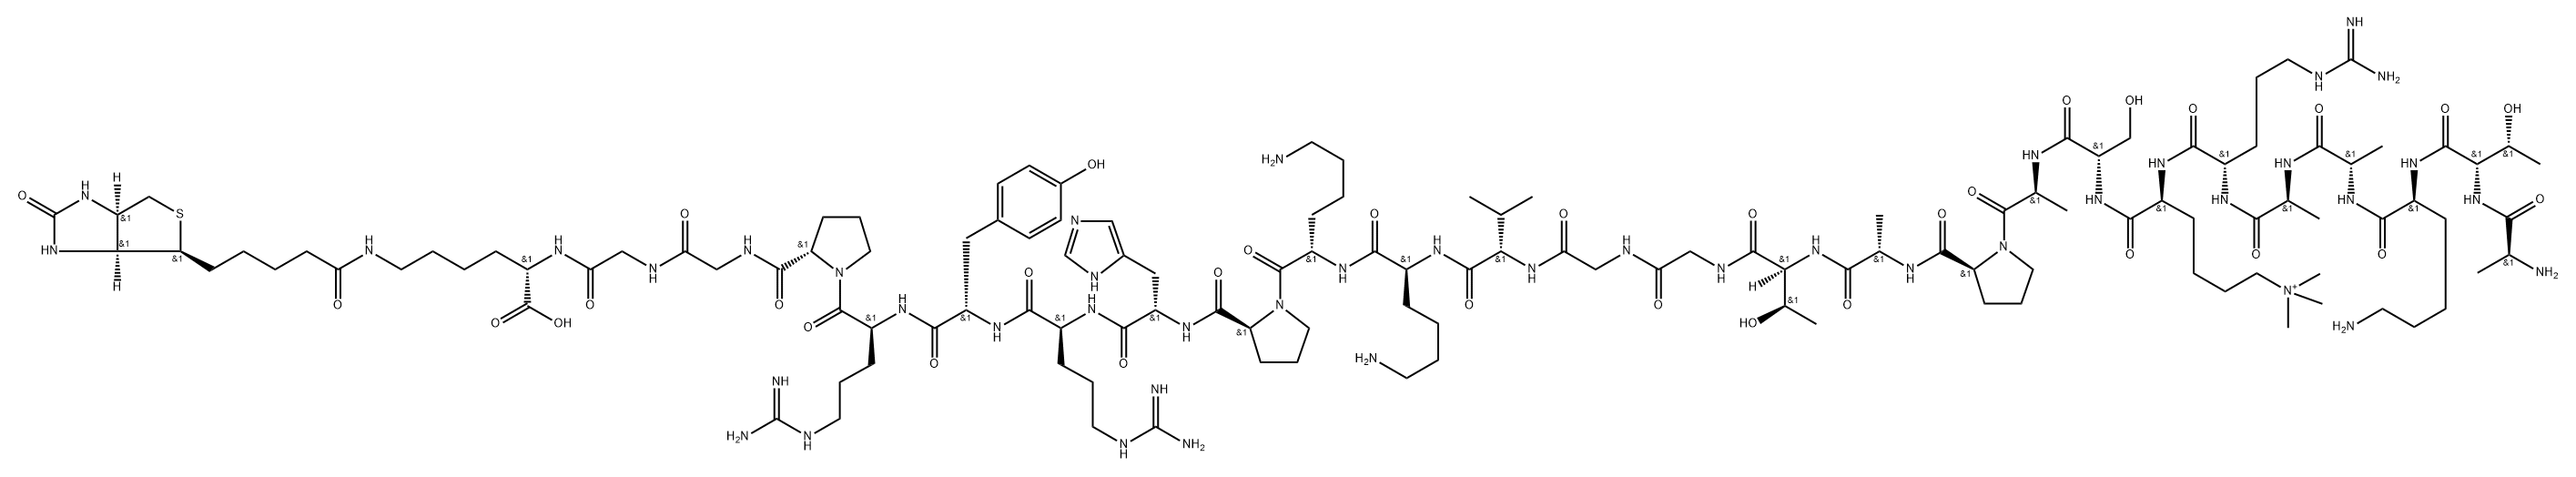 (Lys(Me)32)-Histone H3 (21-44)-Gly-Lys(biotinyl) Structure